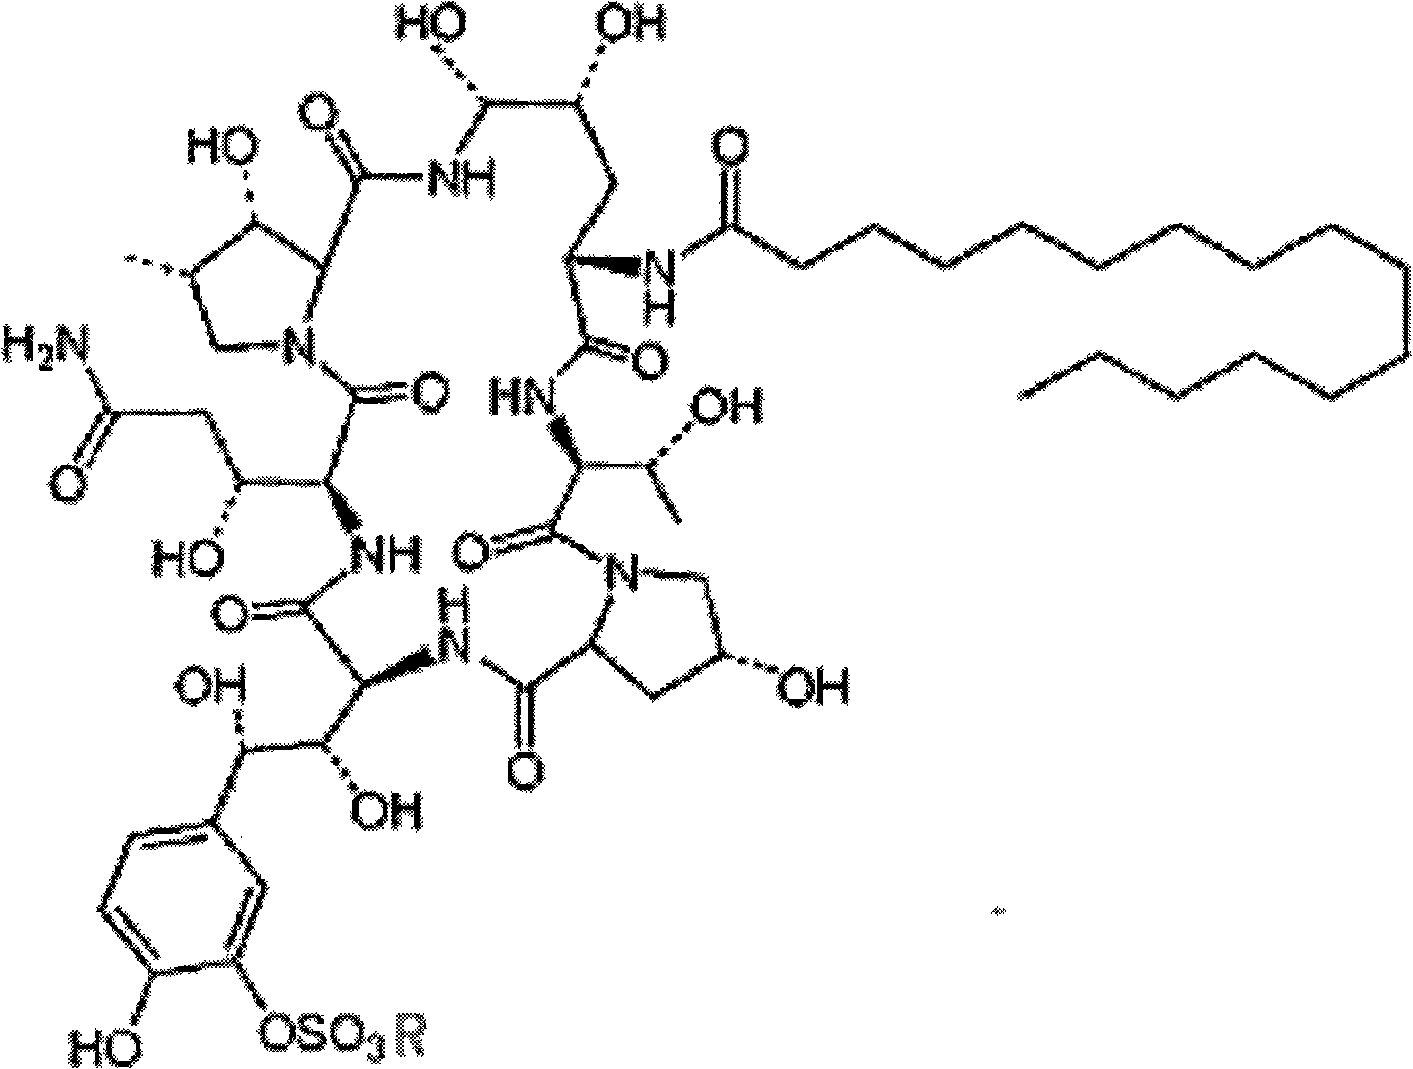 Echinocandin compound purifying method